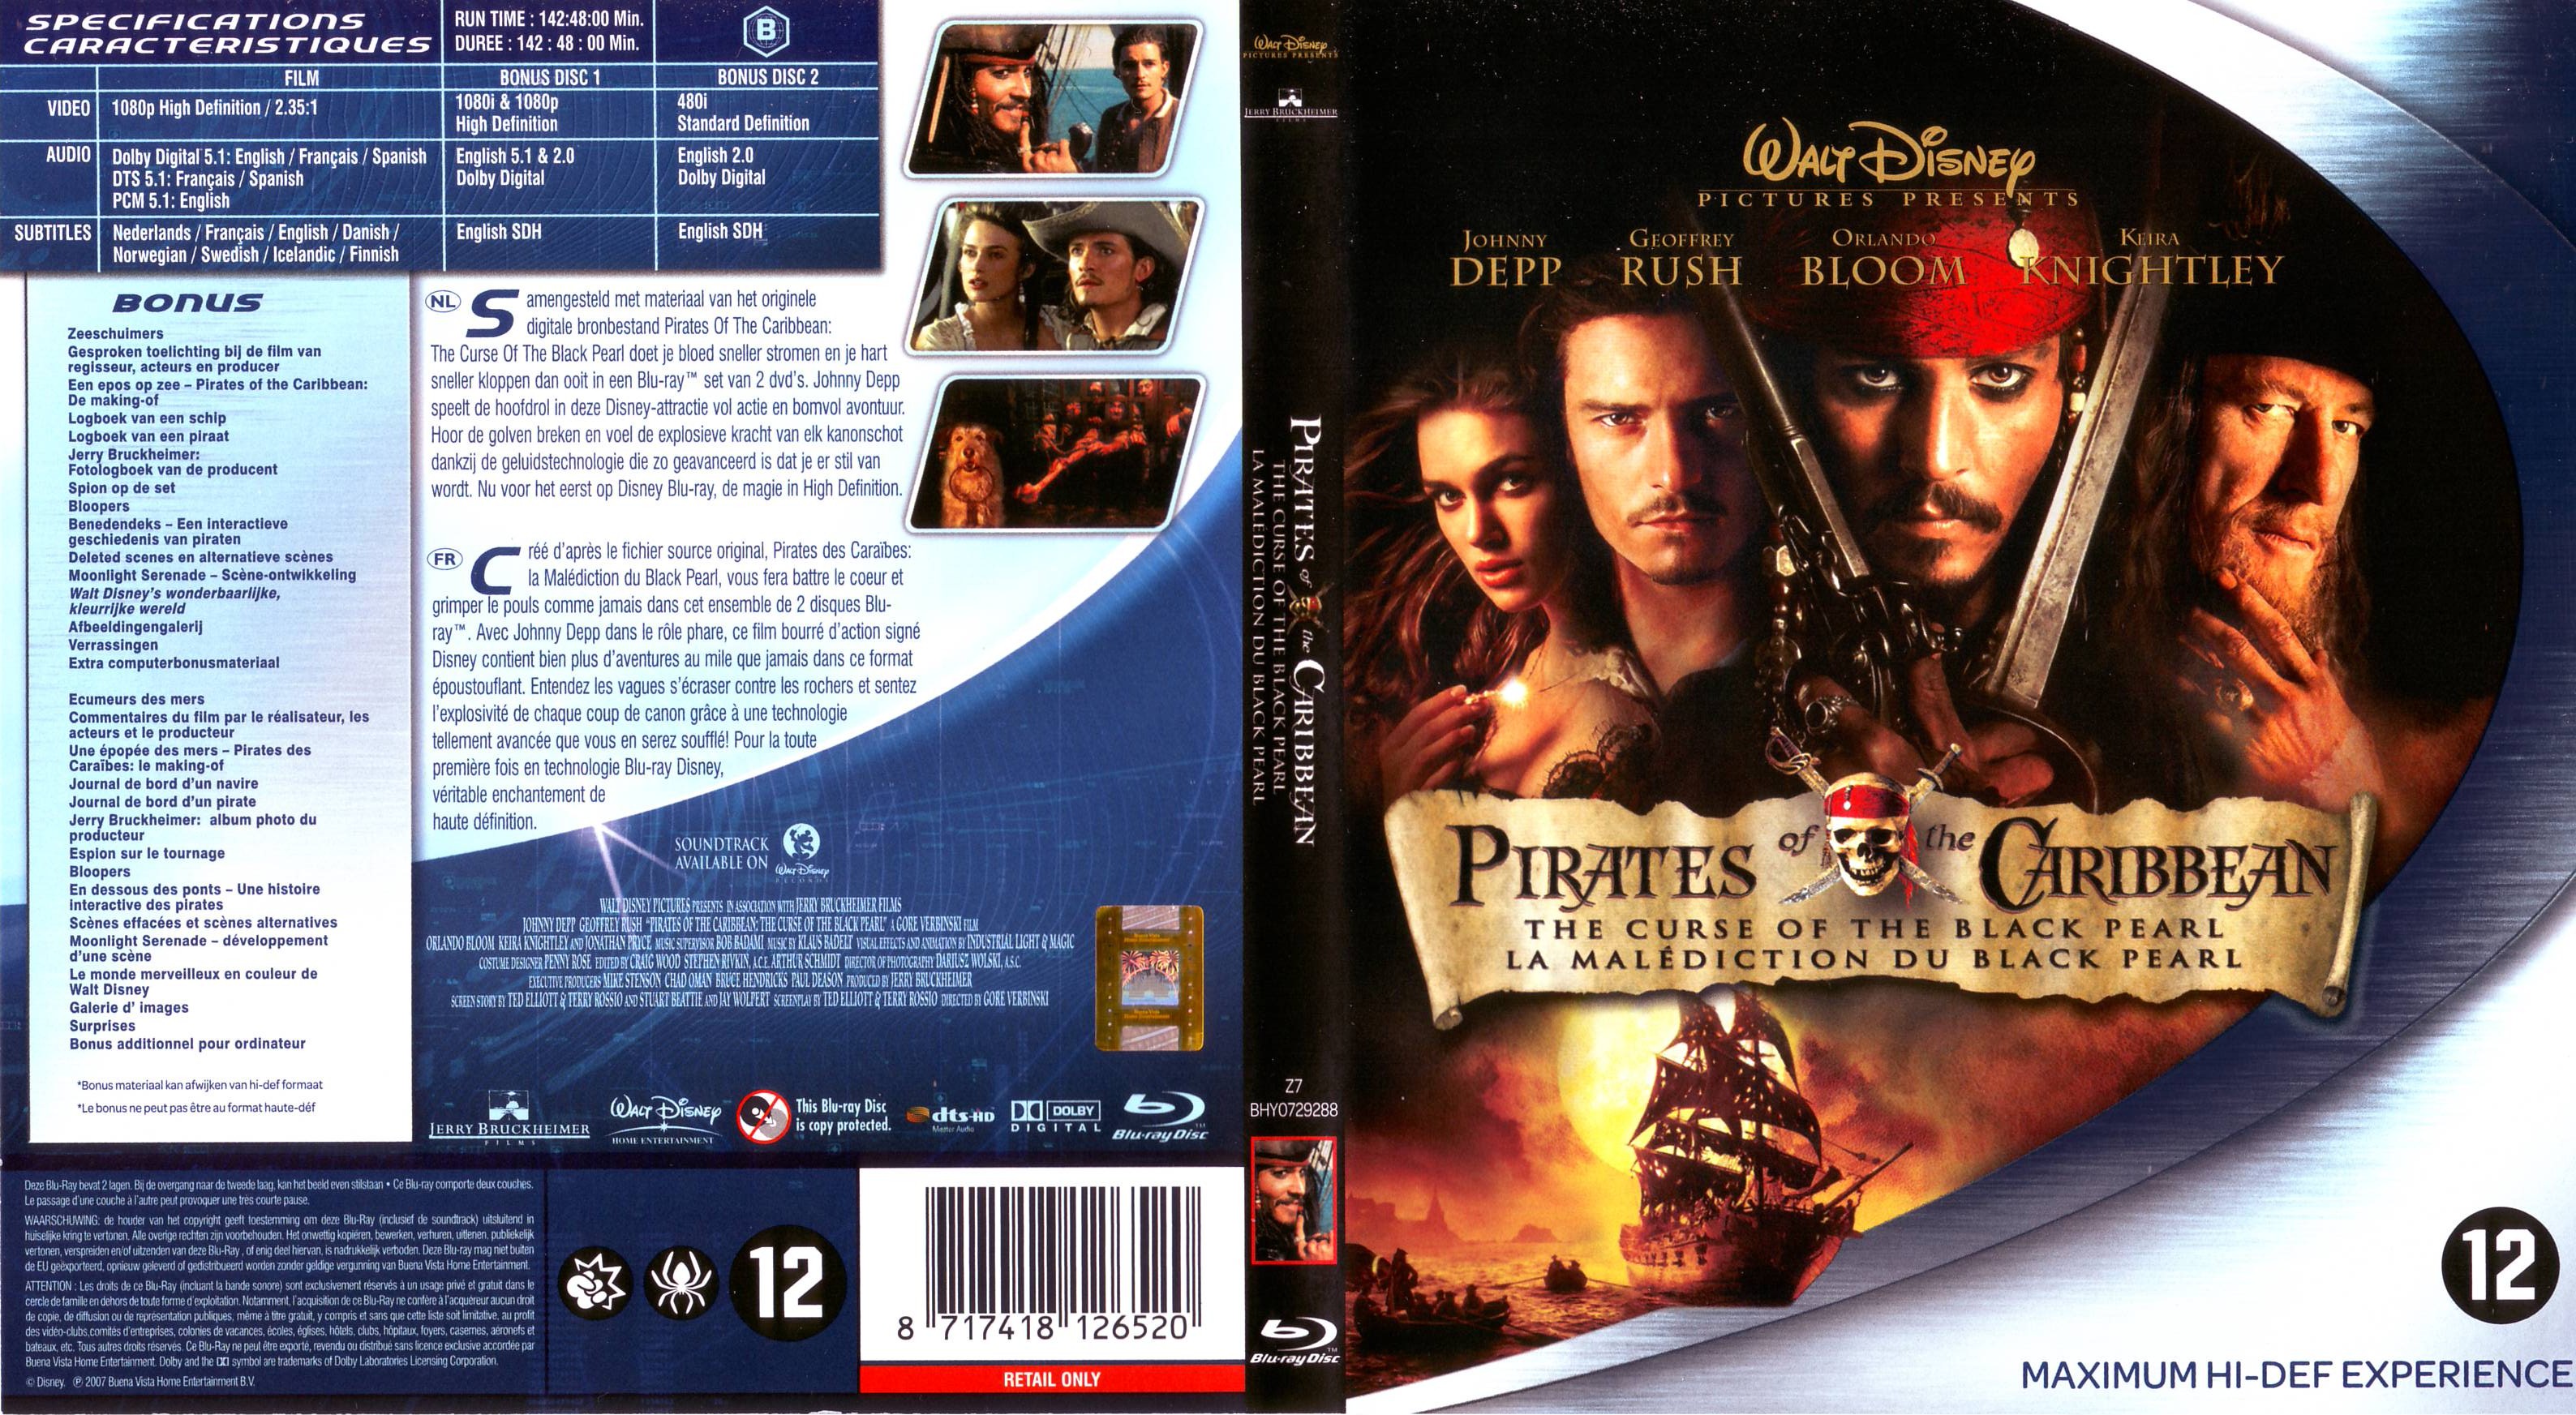 Jaquette DVD Pirates des Caraibes (BLU-RAY)